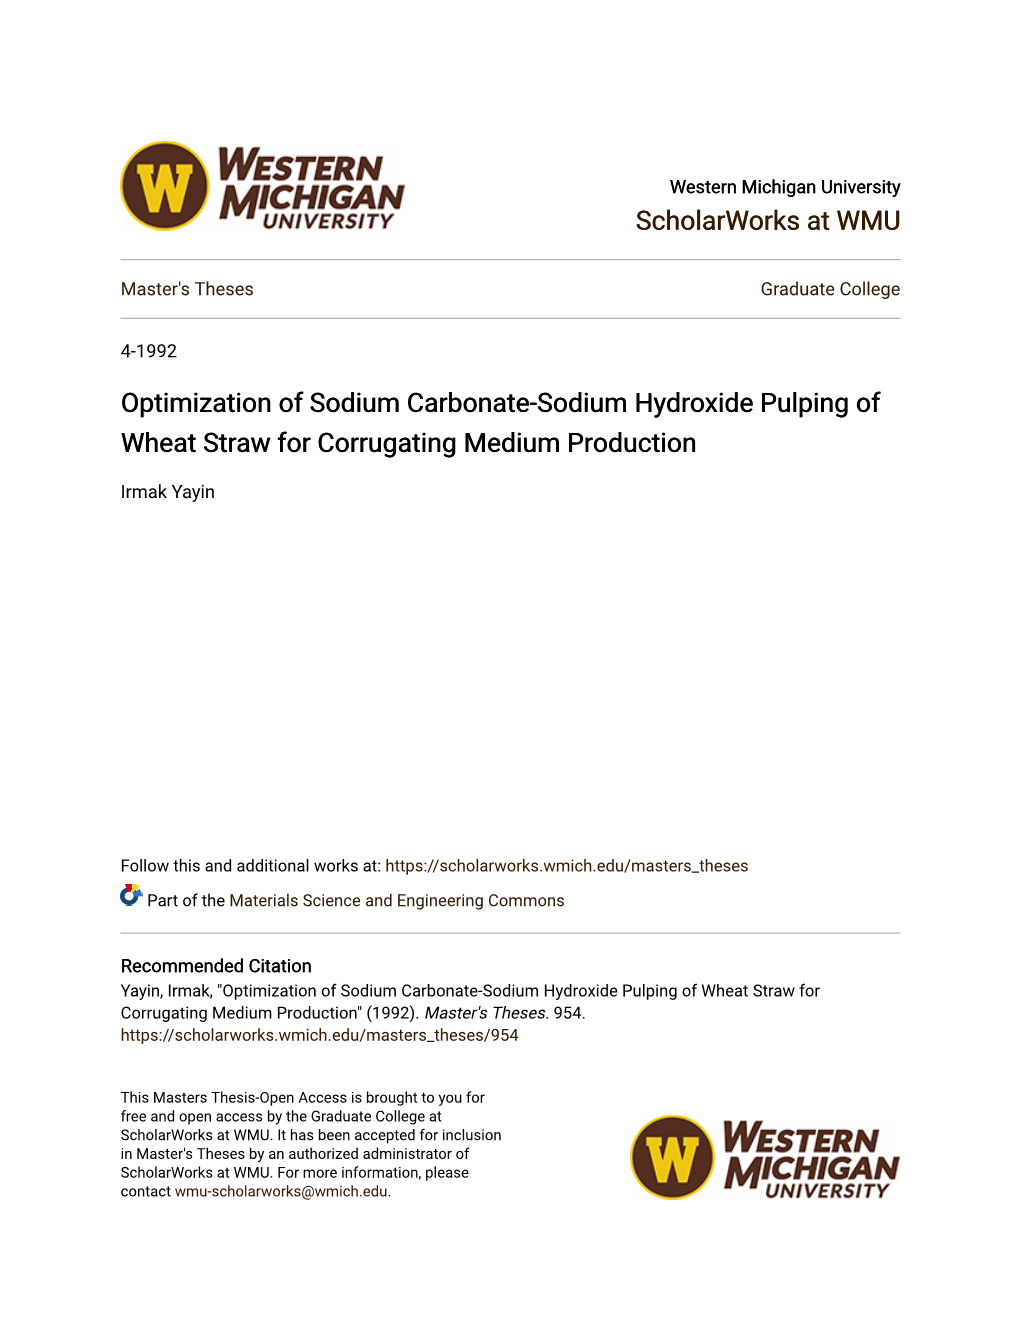 Optimization of Sodium Carbonate-Sodium Hydroxide Pulping of Wheat Straw for Corrugating Medium Production